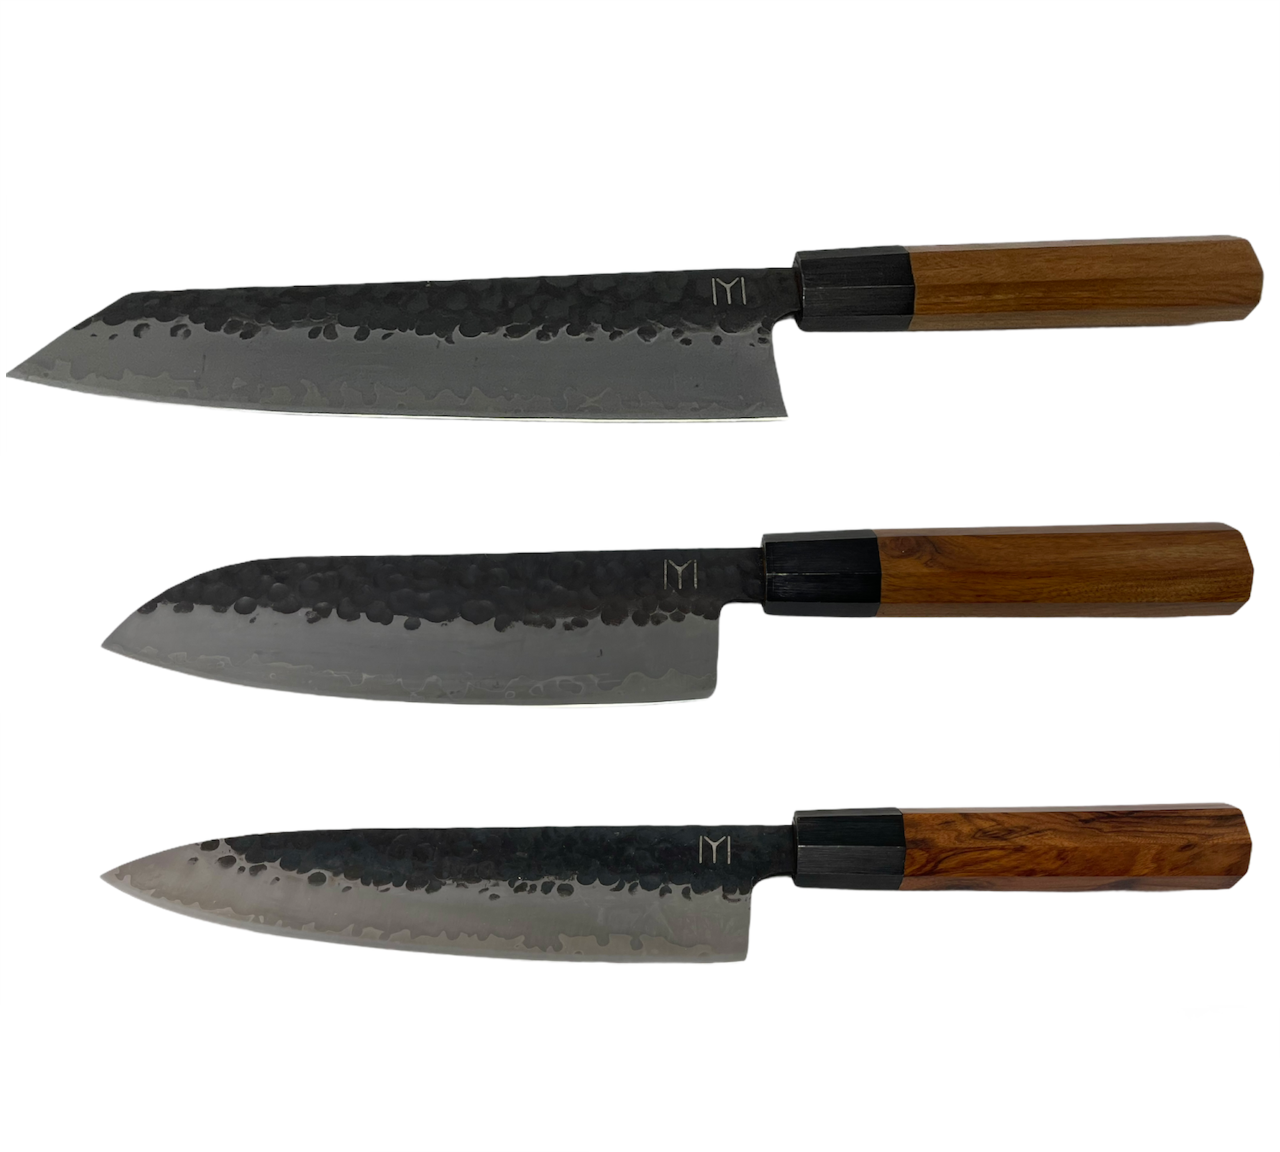  YUSOTAN Chef Knife Black Three-Piece Set of Santoku